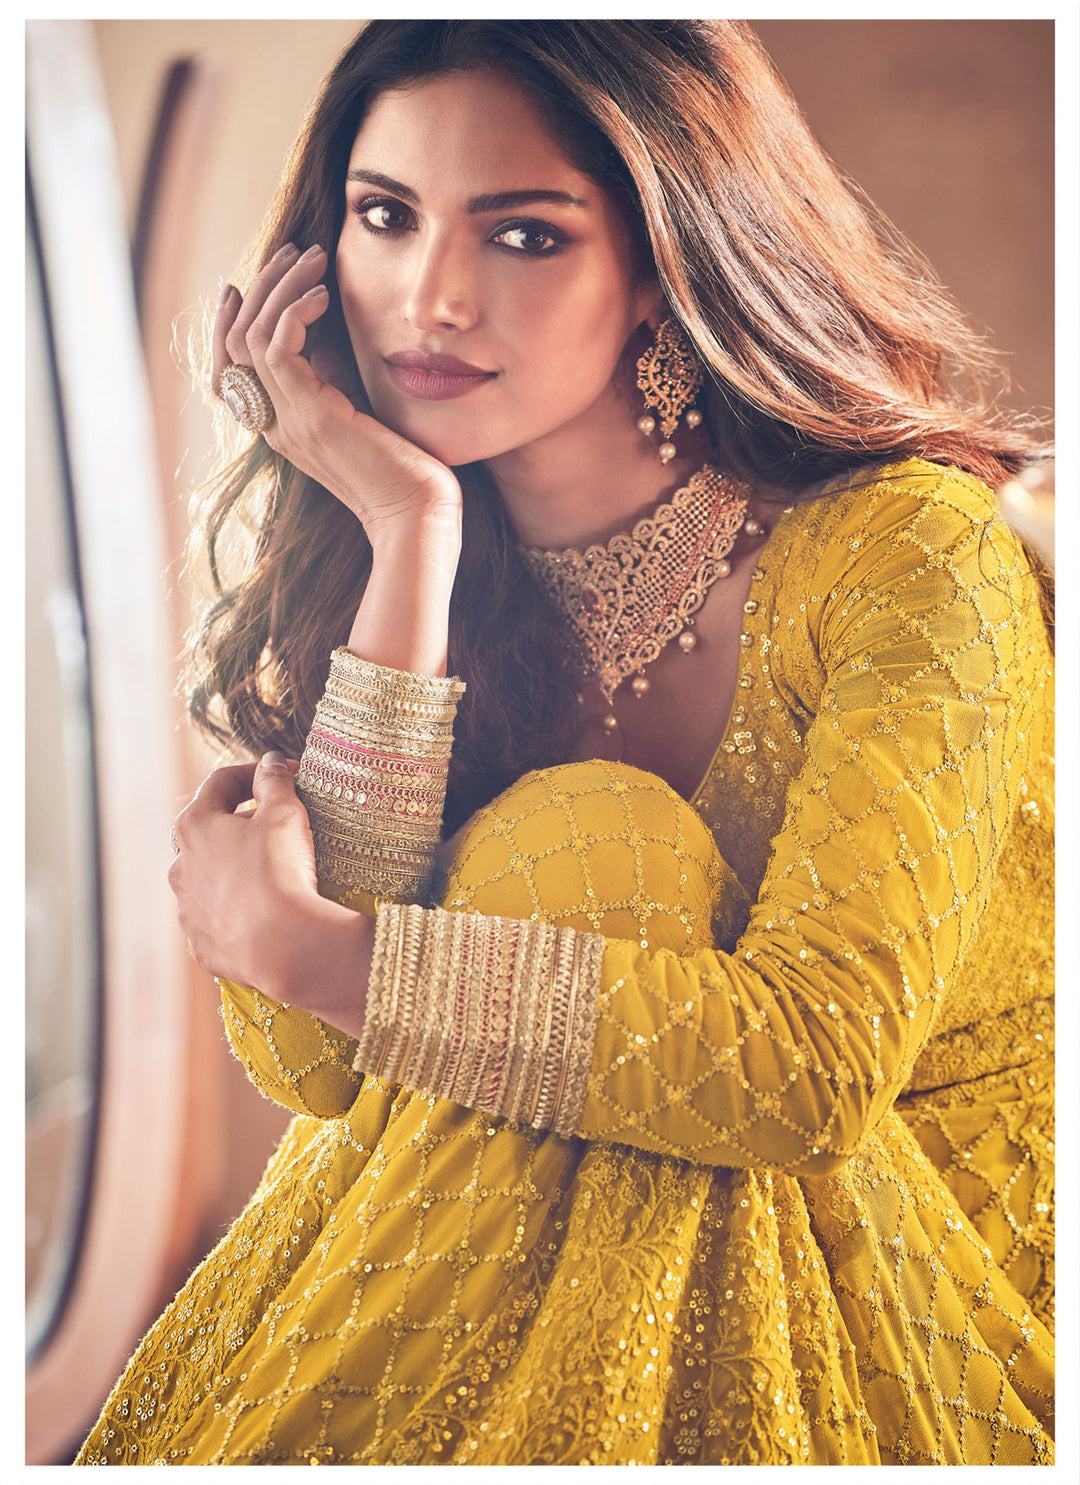 Buy Charming Yellow Floor Length Anarkali - Embroidered Anarkali Suit